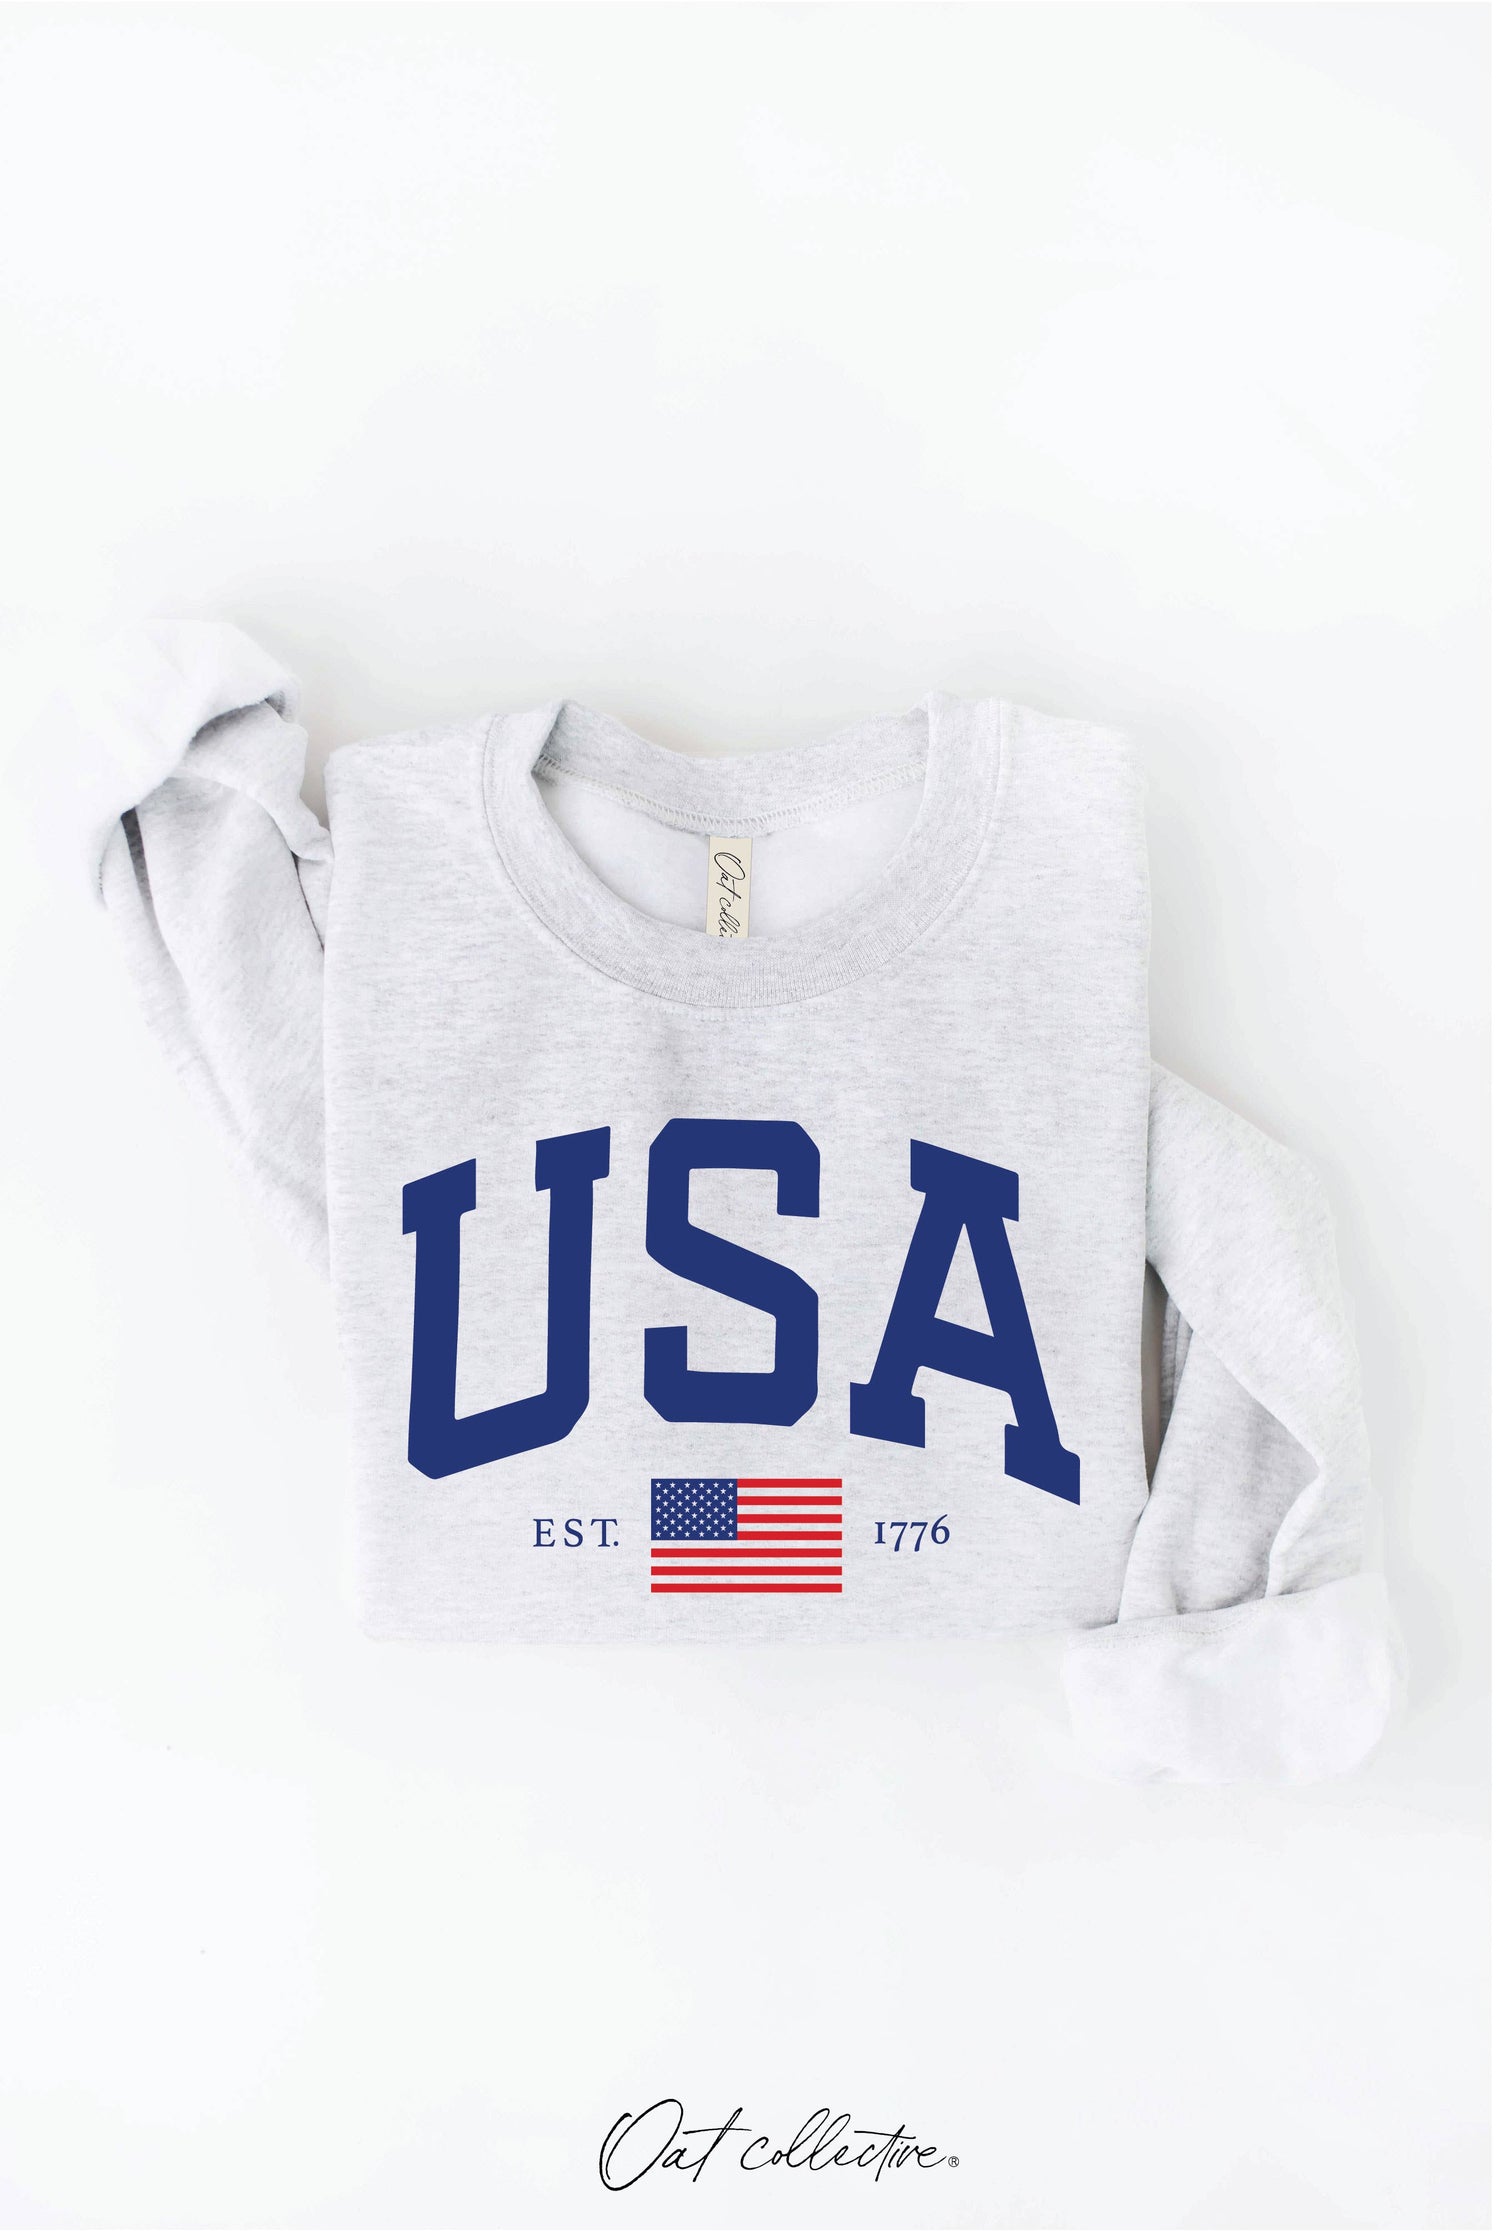 USA EST 1776 Sweatshirt